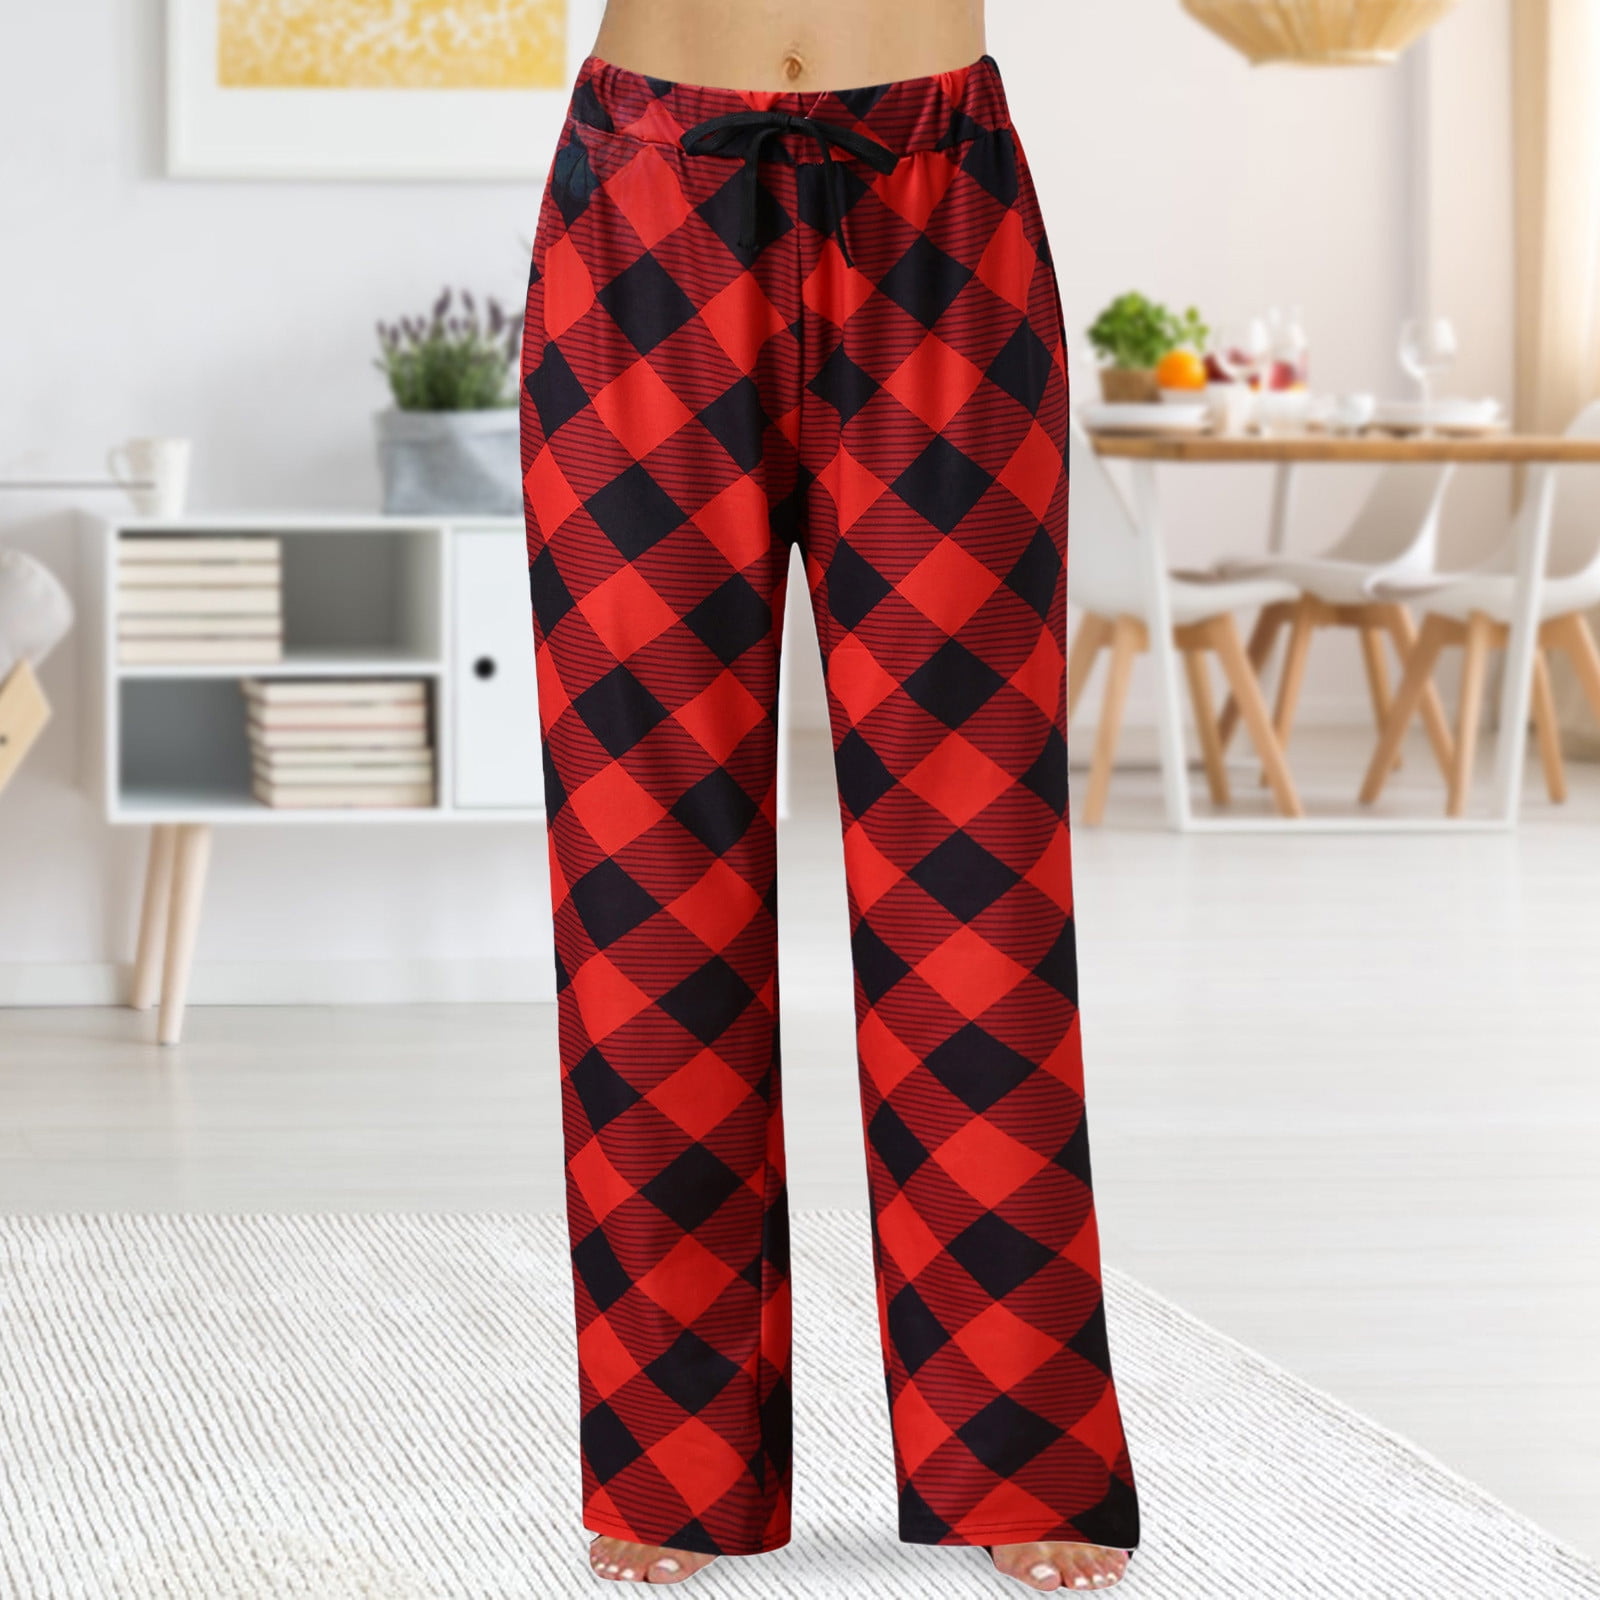 Hvyesh Women Lounge Pants Comfy Pajama Bottom with Pockets Stretch